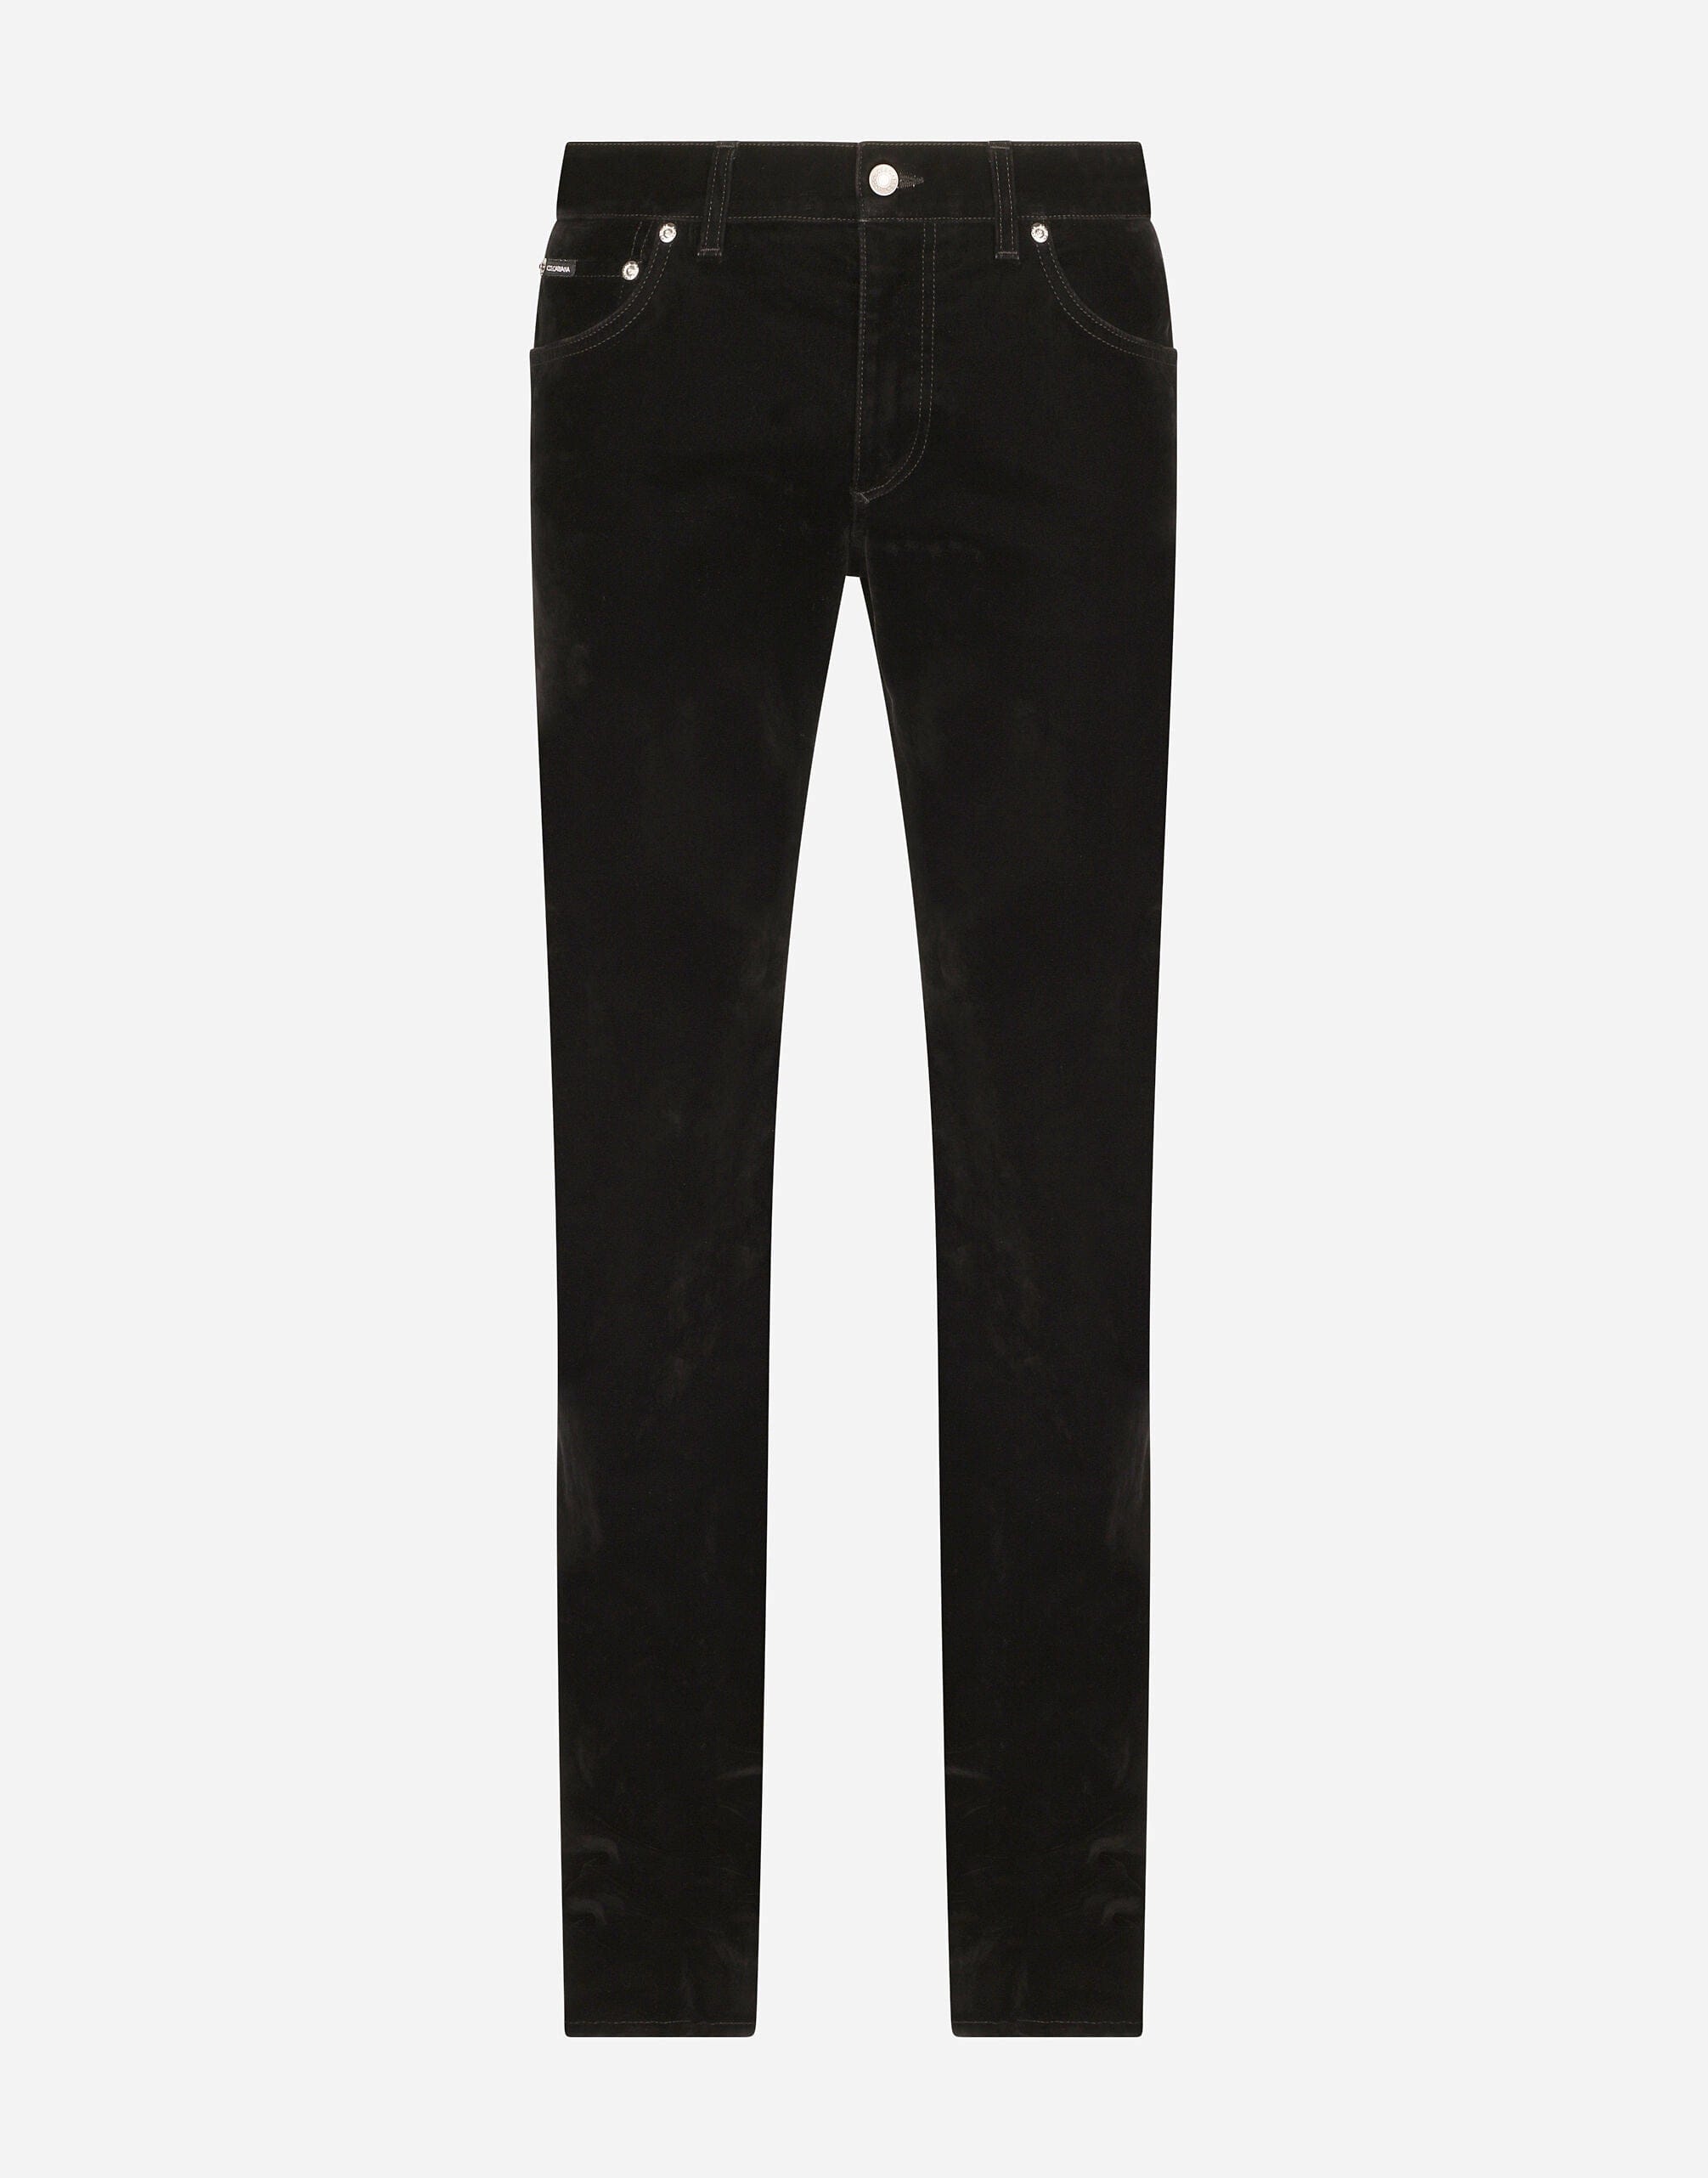 Dolce & Gabbana Flocked Slim-Fit Jeans